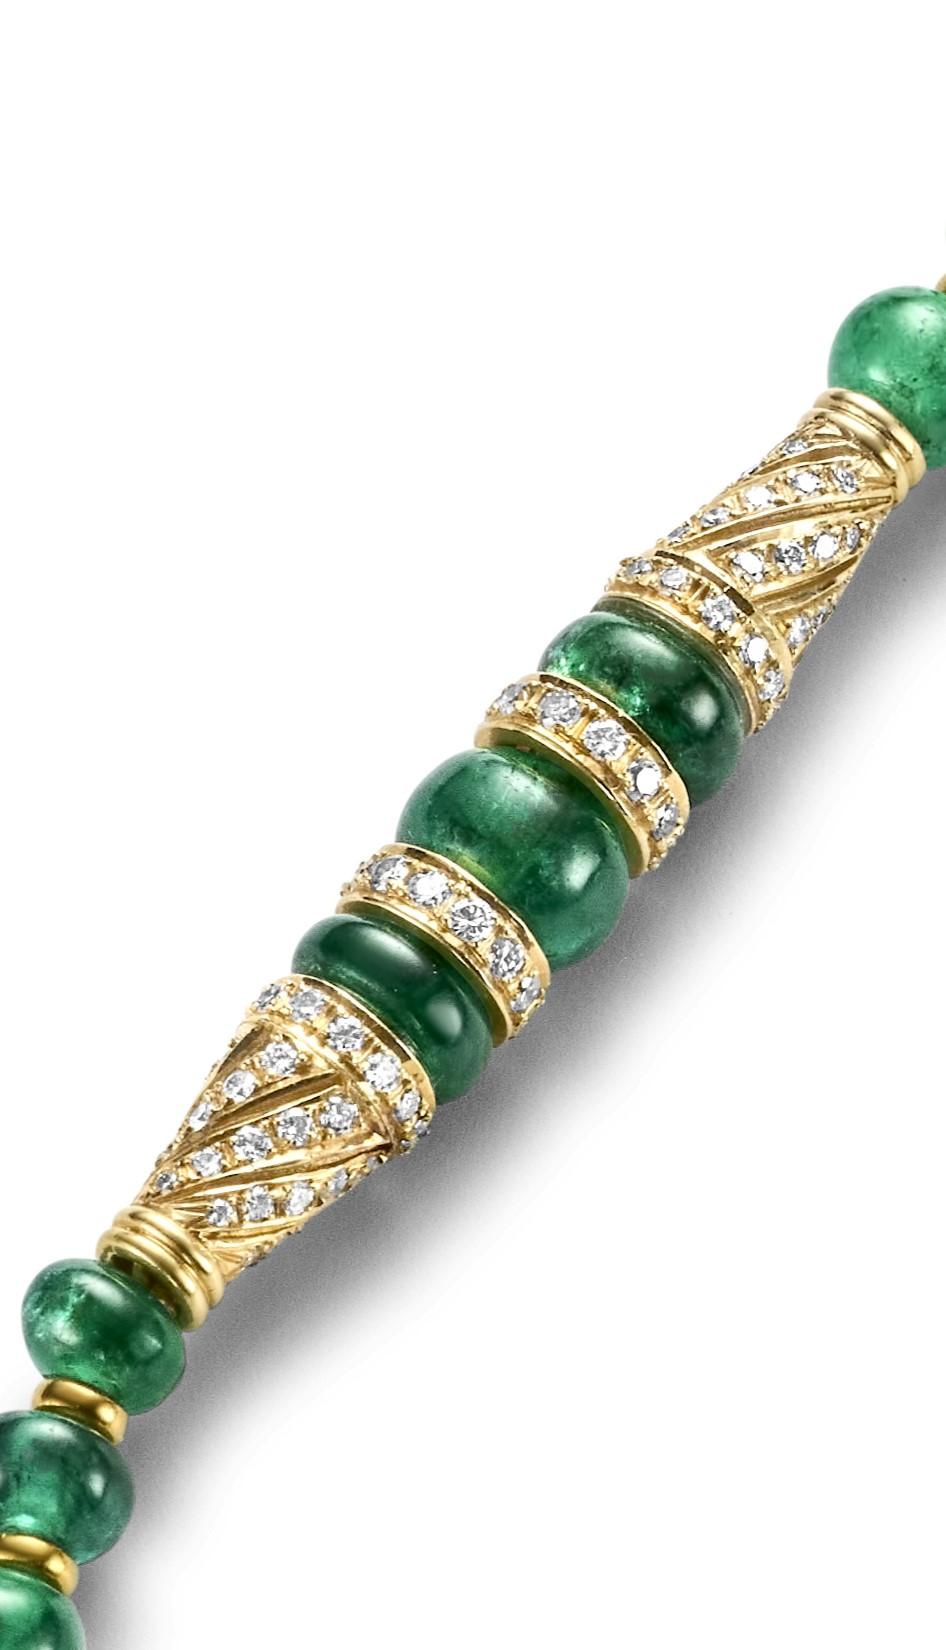 Adler Genèva 18kt Gold Necklaces 480ct Faceted Bead Emeralds CGL Certified For Sale 2